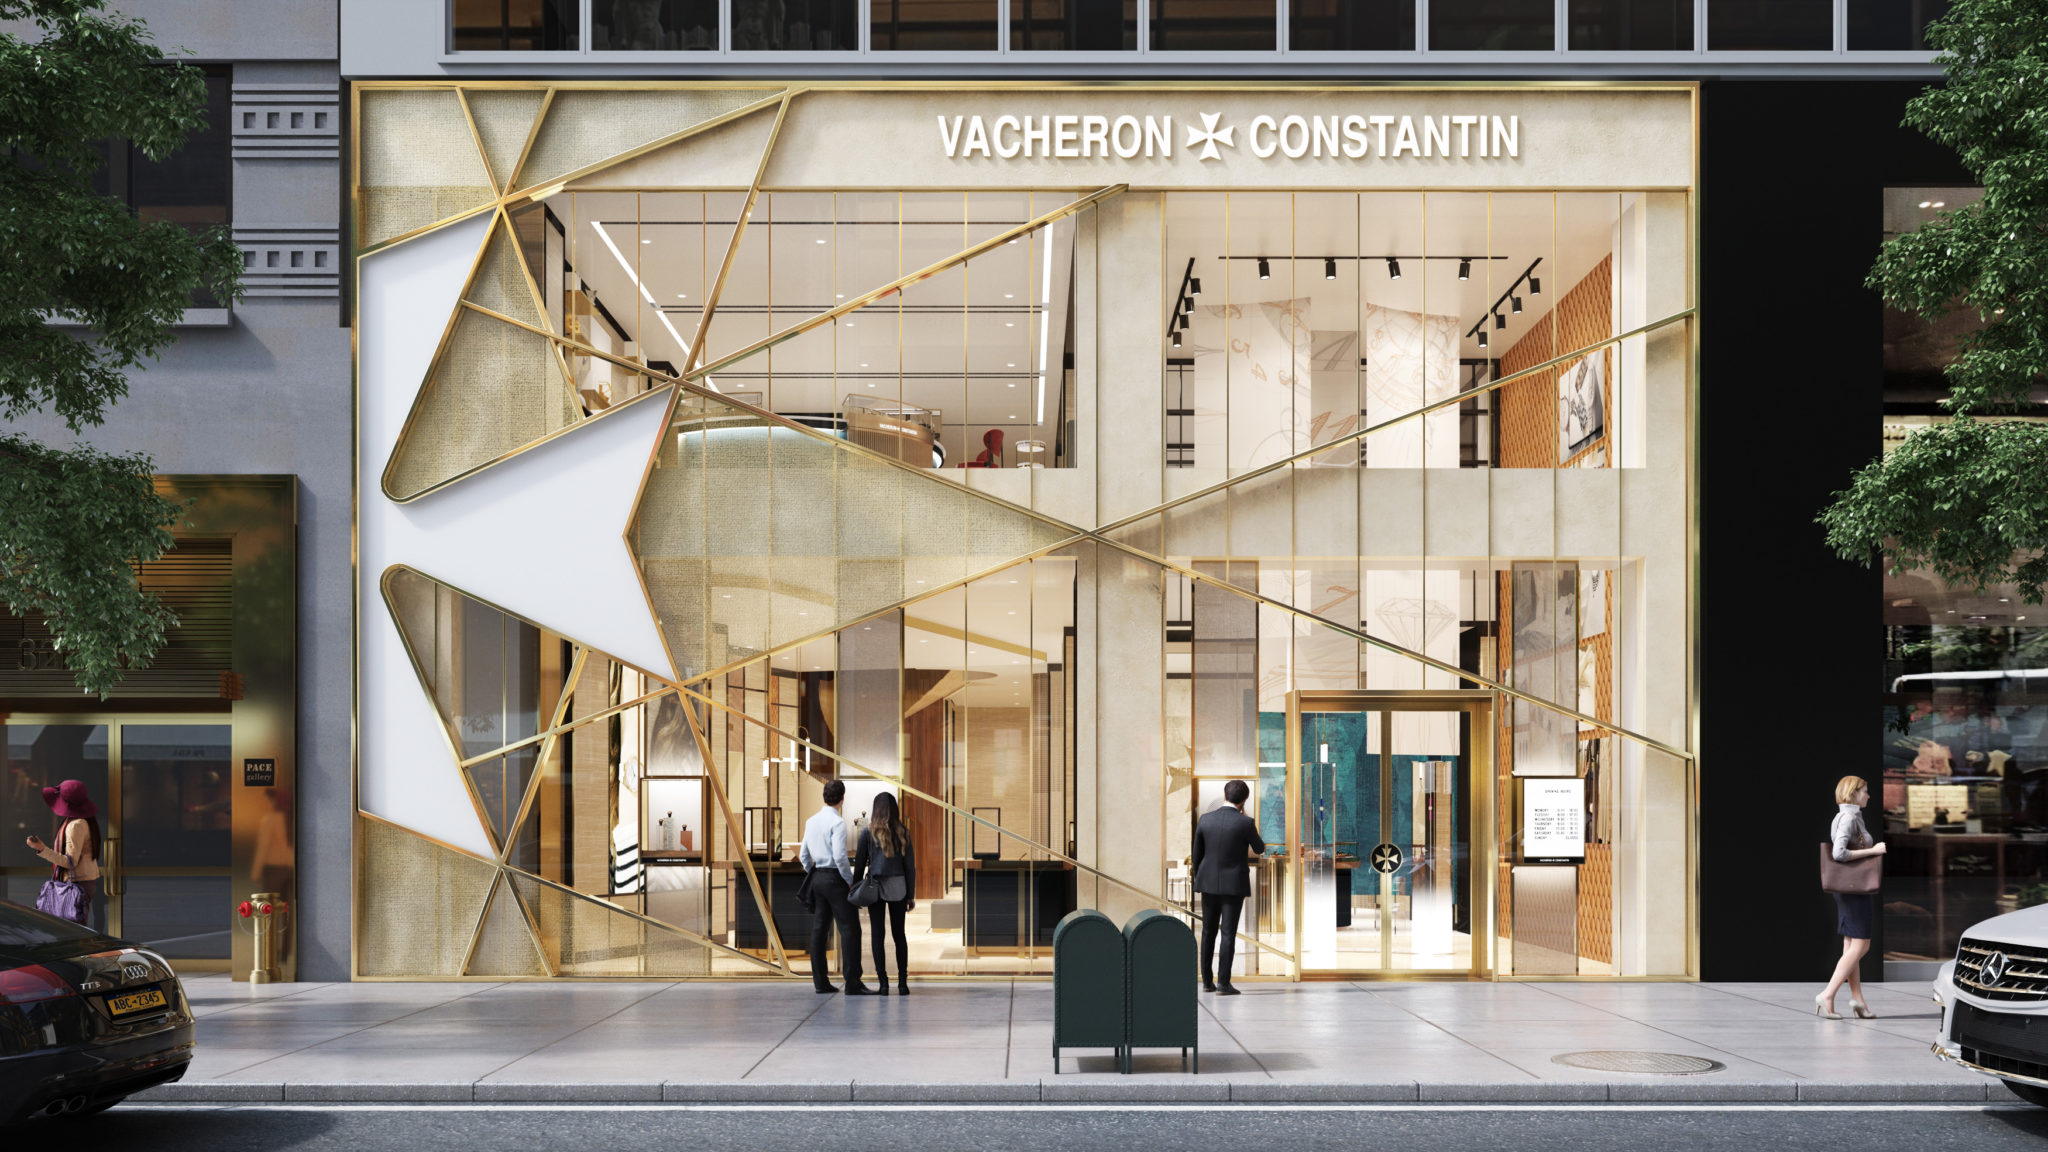 Vacheron Constantin commits to major new Manhattan flagship in 2021